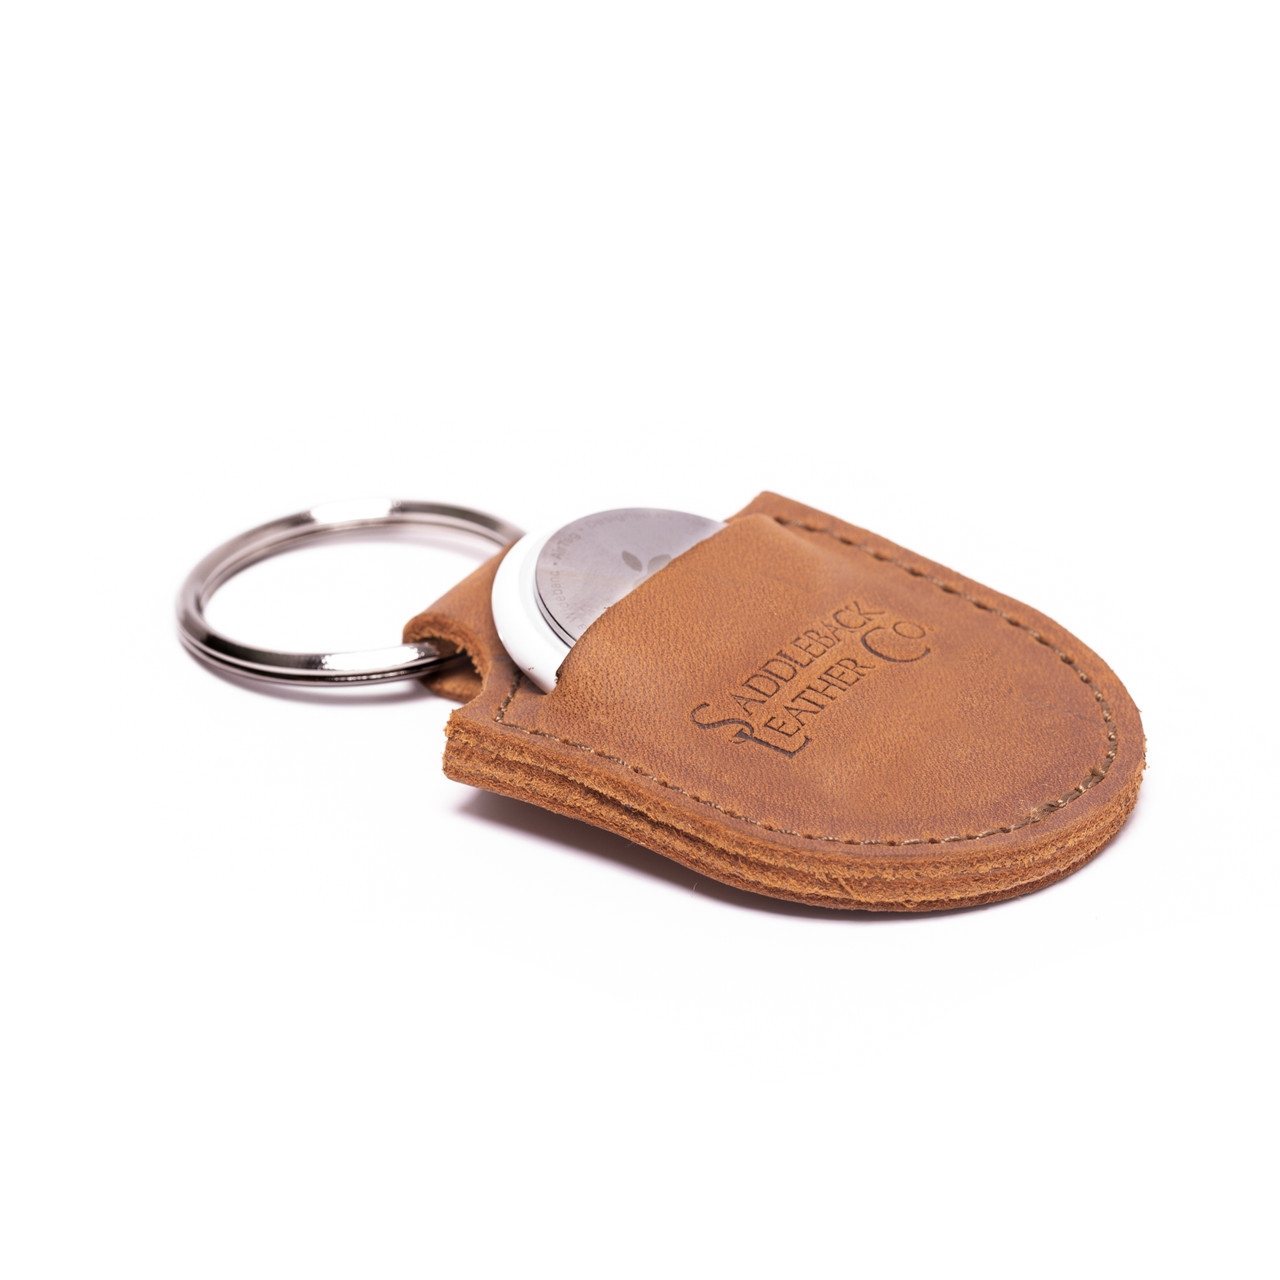 Saddleback Leather AirTag Keychain Case - The Rivet